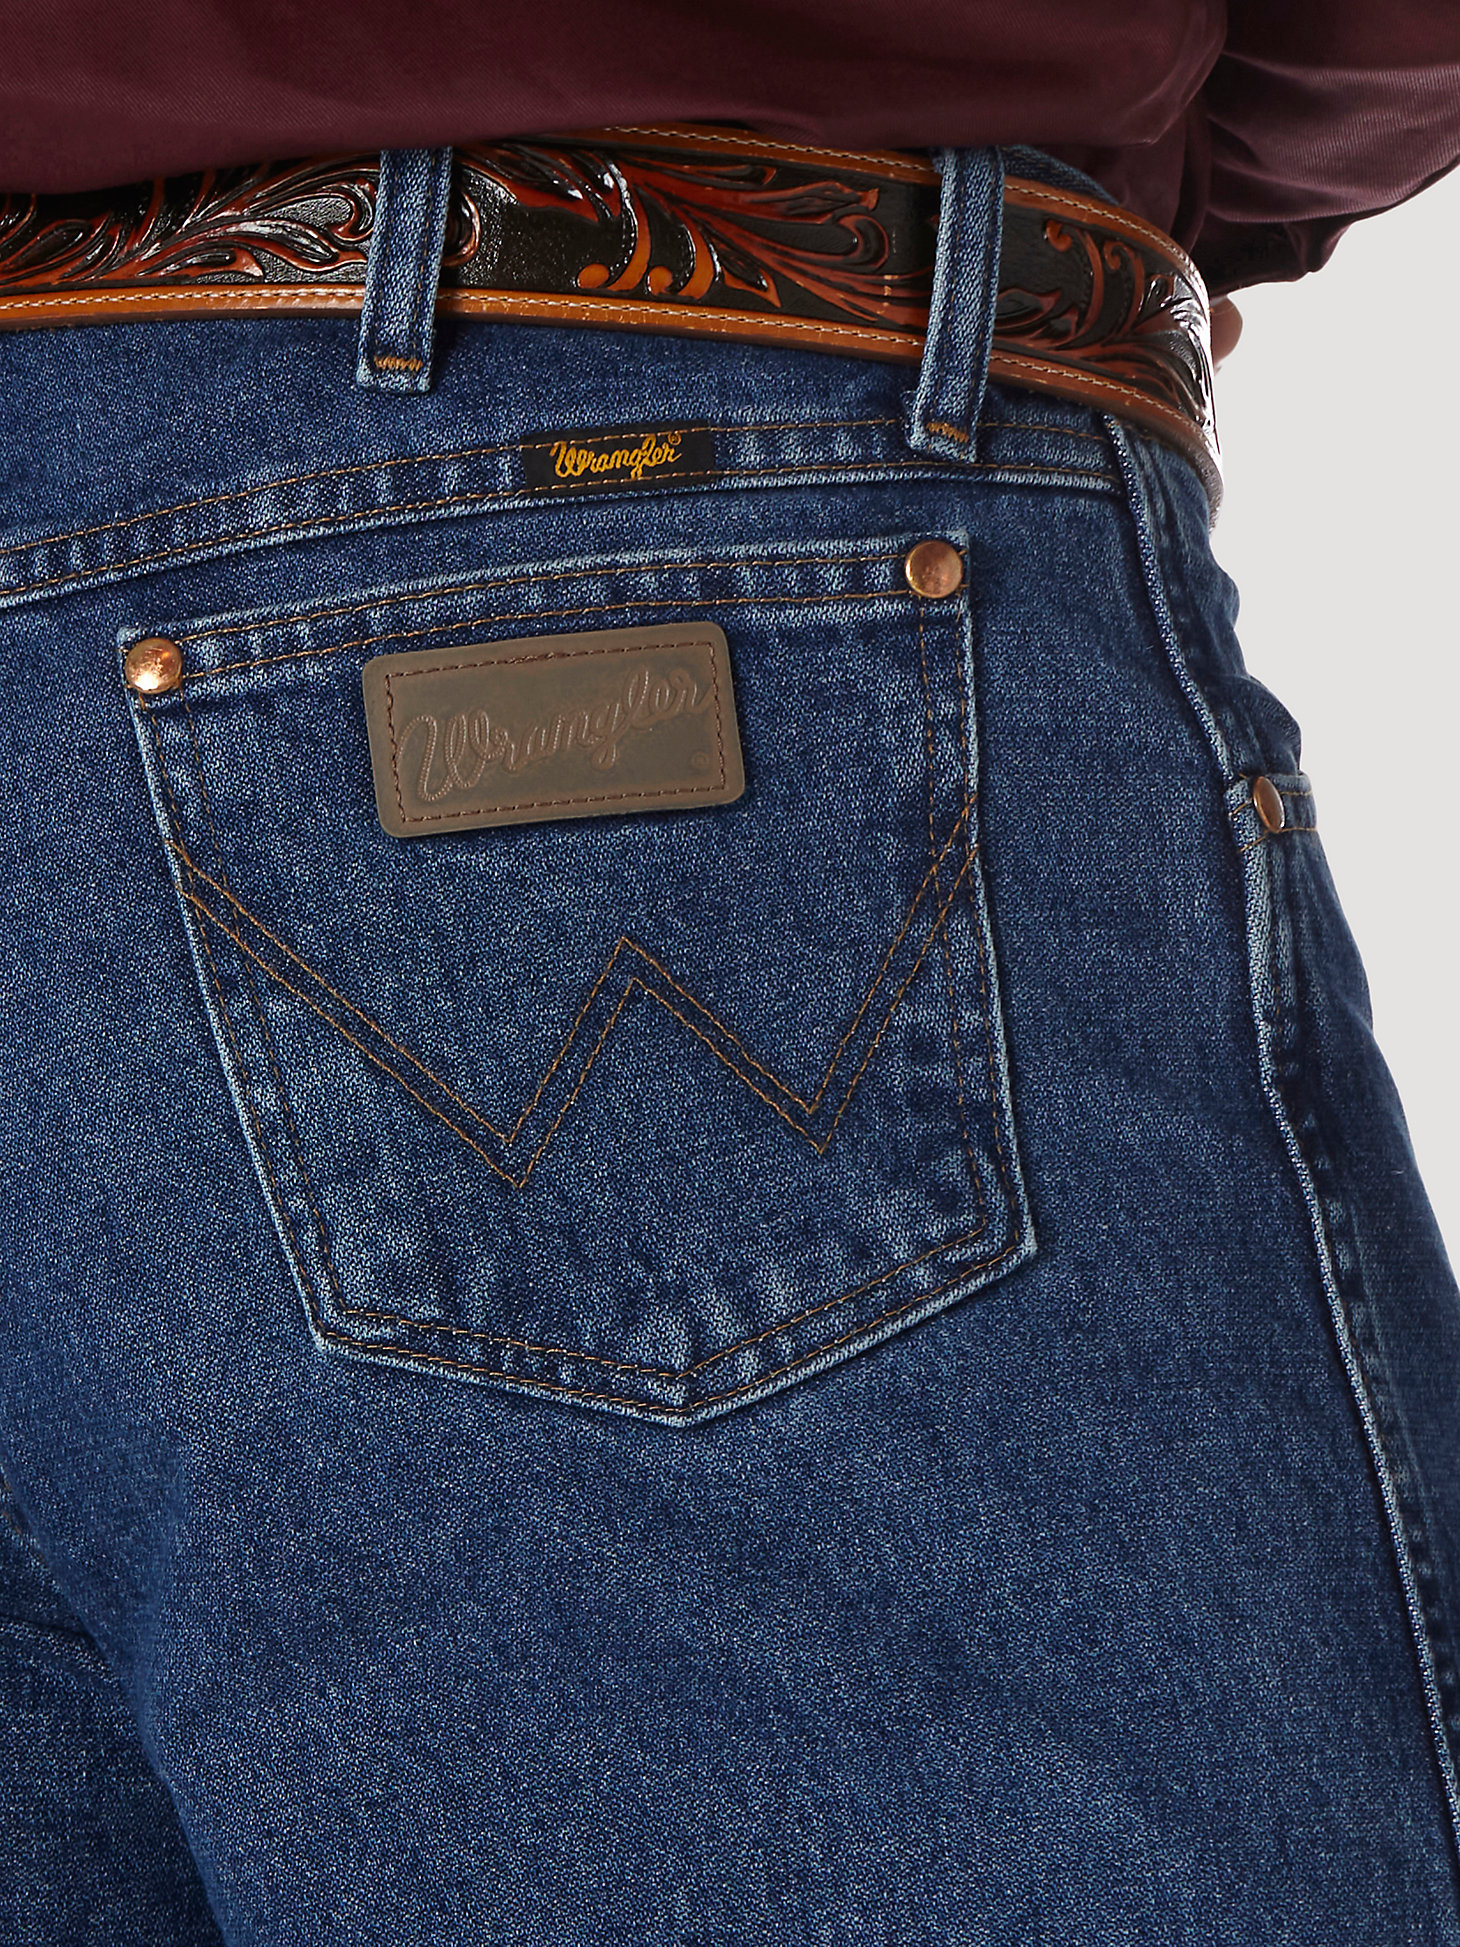 Wrangler® Cowboy Cut® Original Fit Jean in Stonewashed alternative view 3